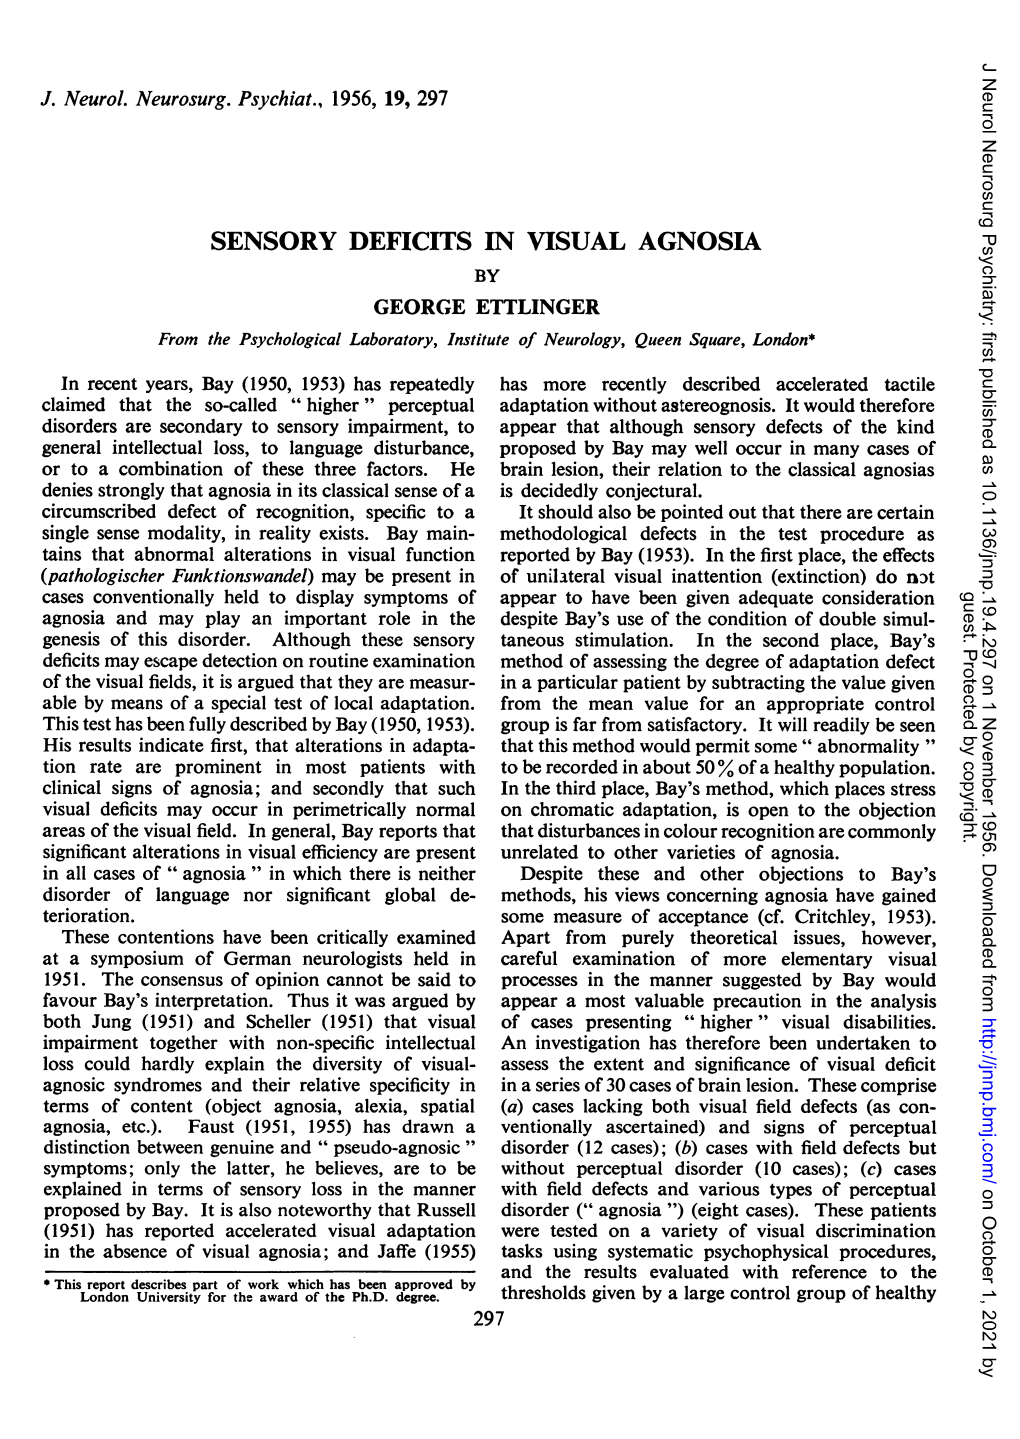 Sensory Deficits in Visual Agnosia